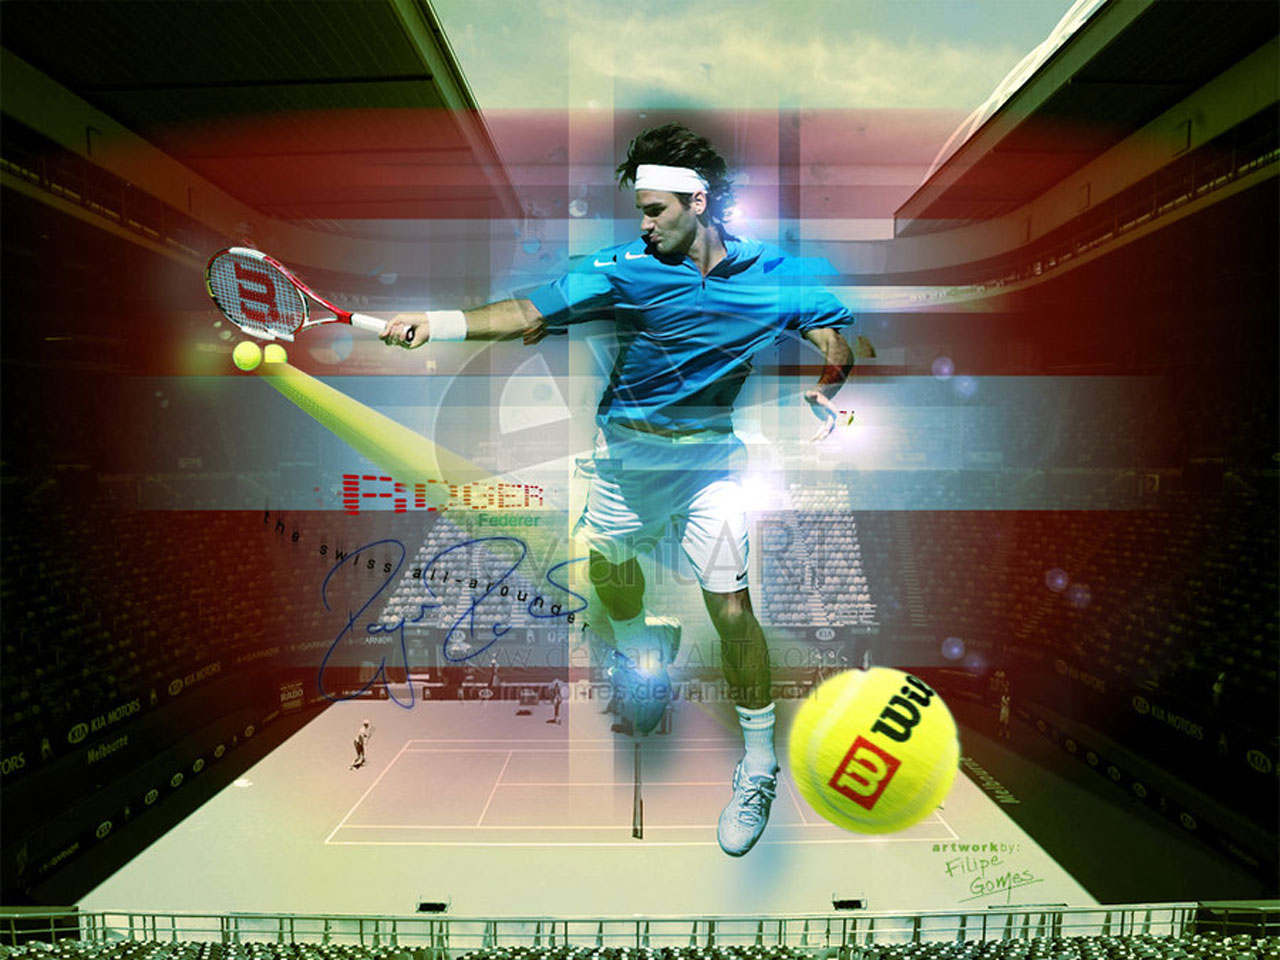 http://4.bp.blogspot.com/-3h4RsBxmBlg/TjcOKuNiJpI/AAAAAAAAFso/SEFKOoPg9x0/s1600/Best-top-desktop-tennis-player-roger-federer-wallpapers-hd-roger-federer-wallpaper-picture-image-foto-21.jpg